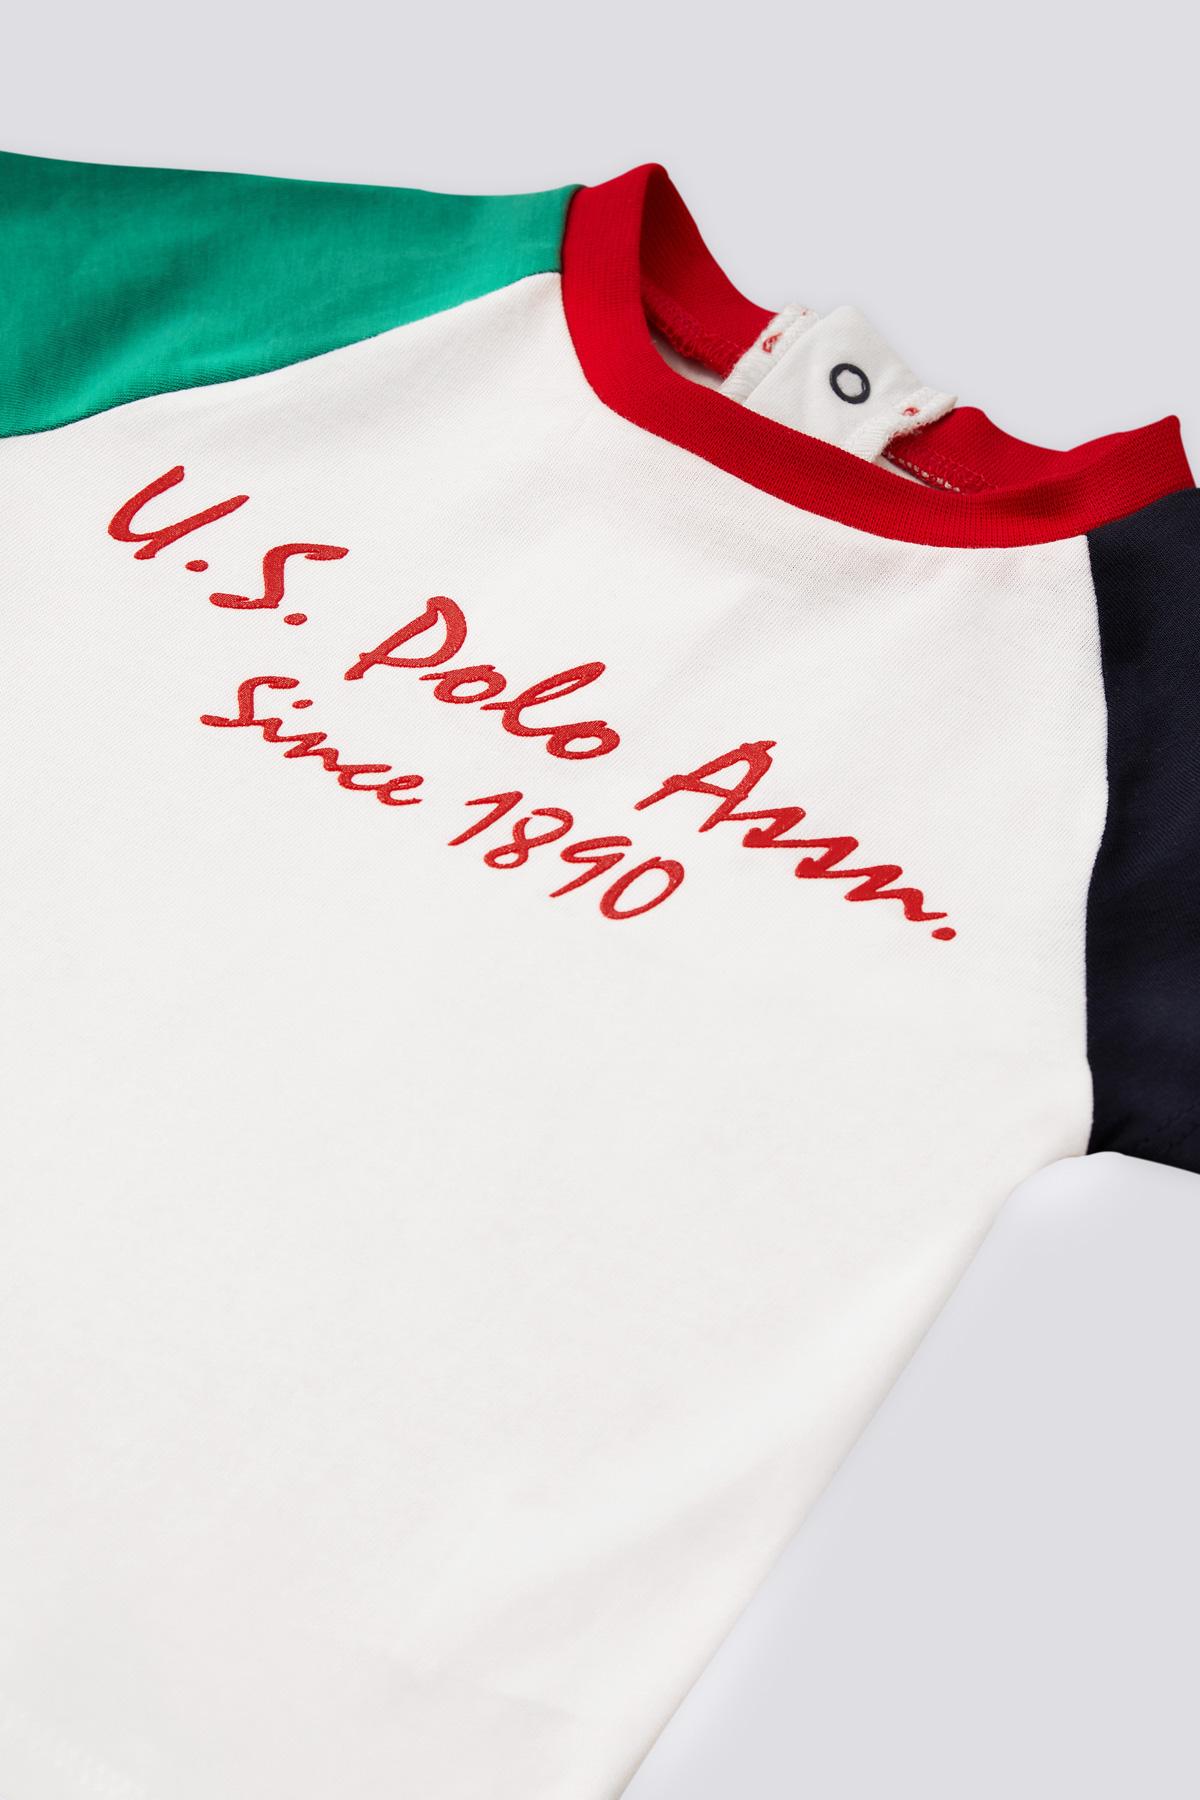 Selected image for U.S. Polo Assn. Komplet za bebe USB1823, Crno-beli